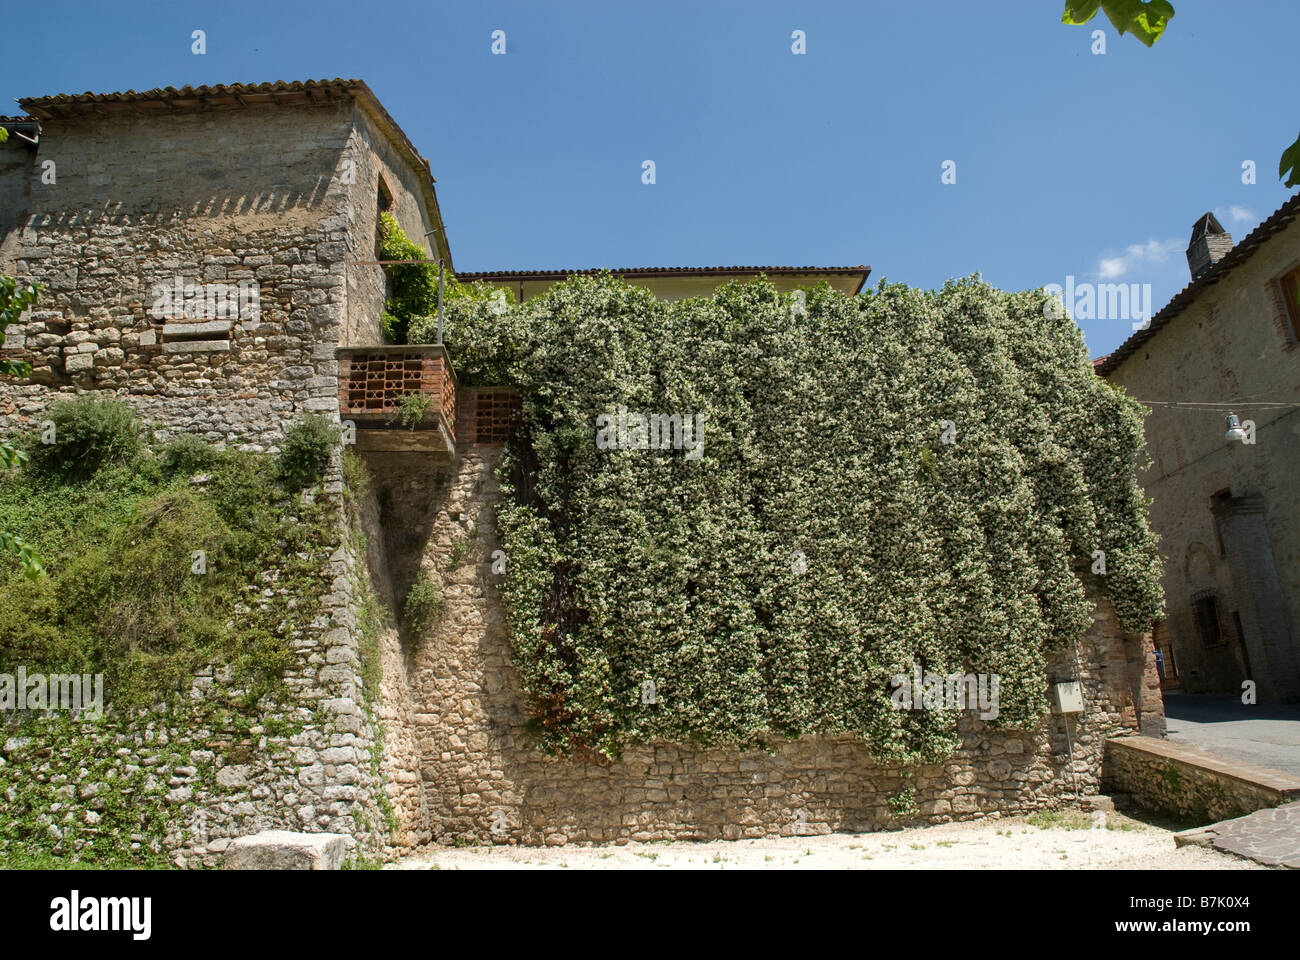 Plazzo Cesi Piazza feredico cesi, Acquasparta, Umbria wall covered with cascading plant Stock Photo